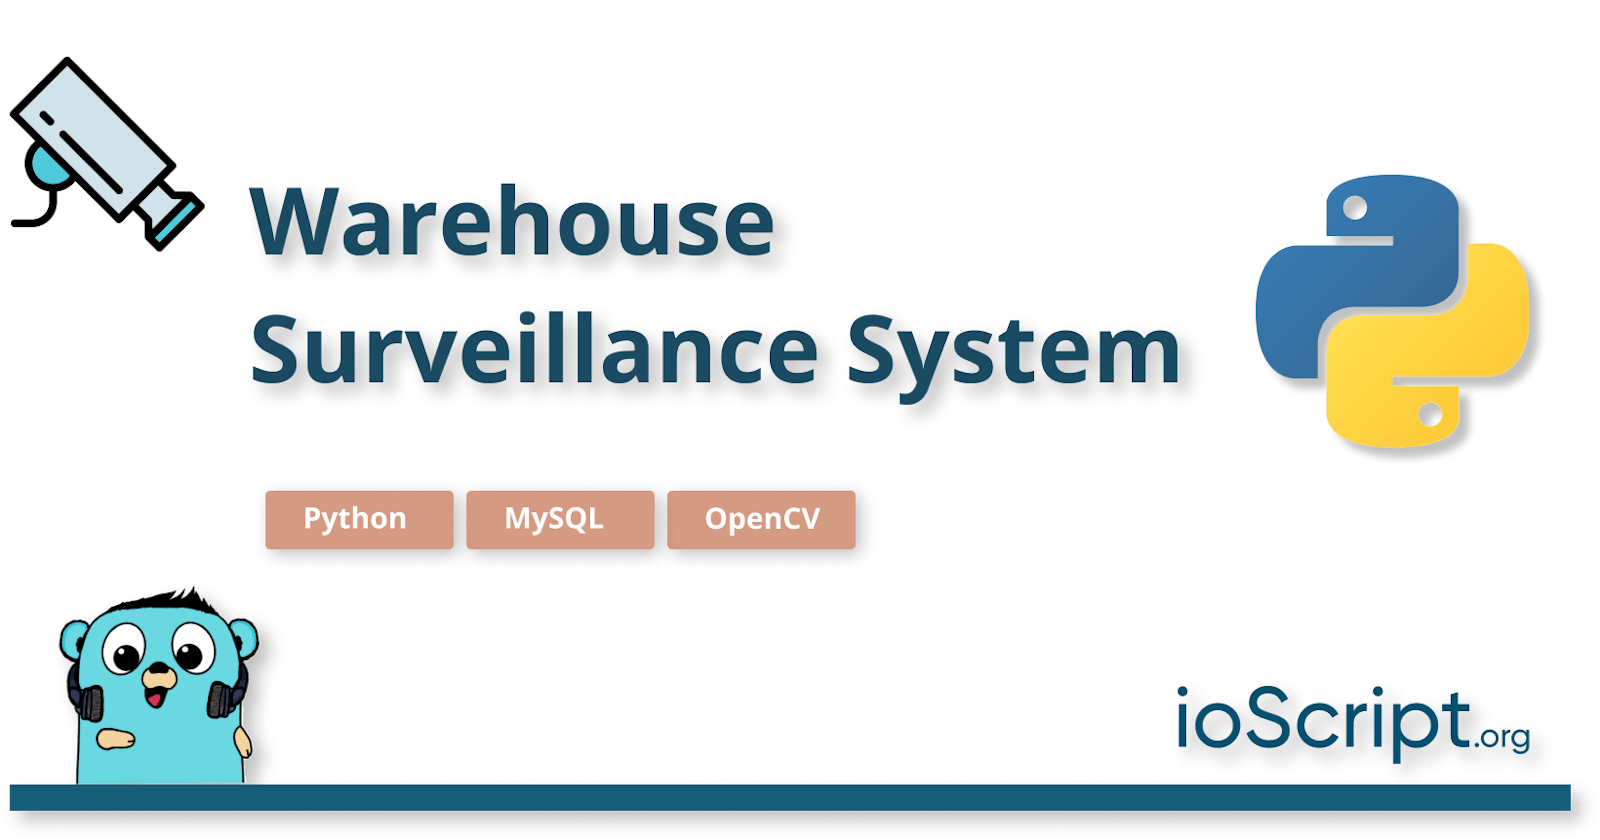 Warehouse Surveillance System using Python